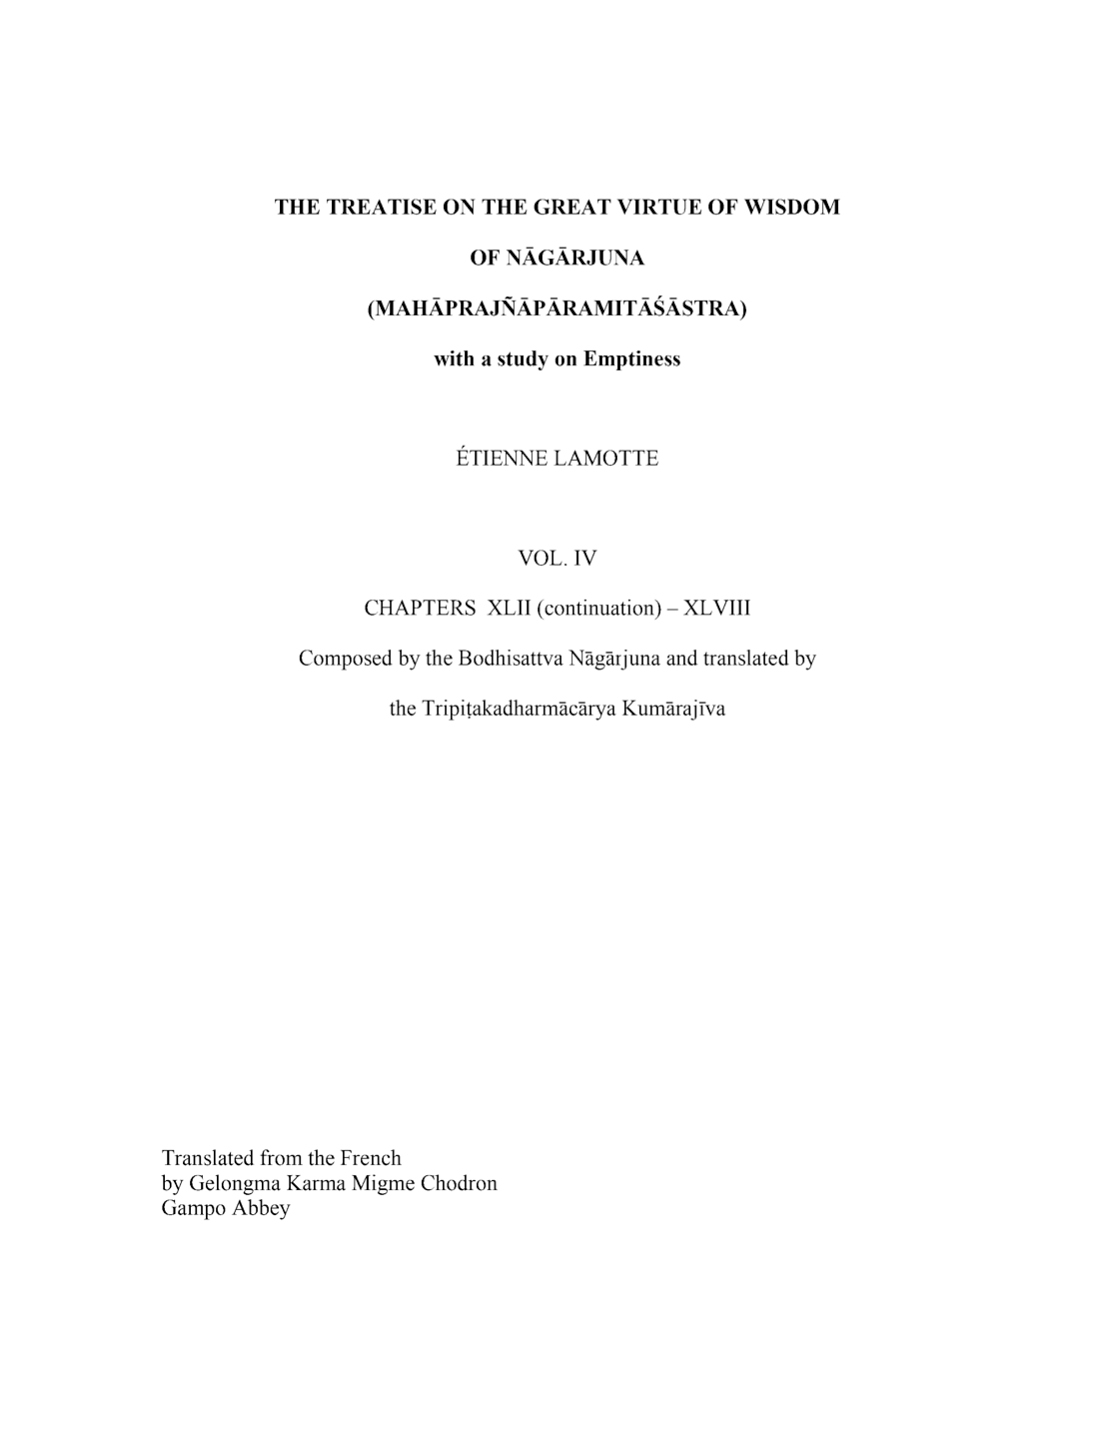 The Treatise on the Great Virtue of Wisdom of Nāgārjuna (Mahāprajñāpāramitāśāstra) Vol. 4 Chodron 2001-front.jpg